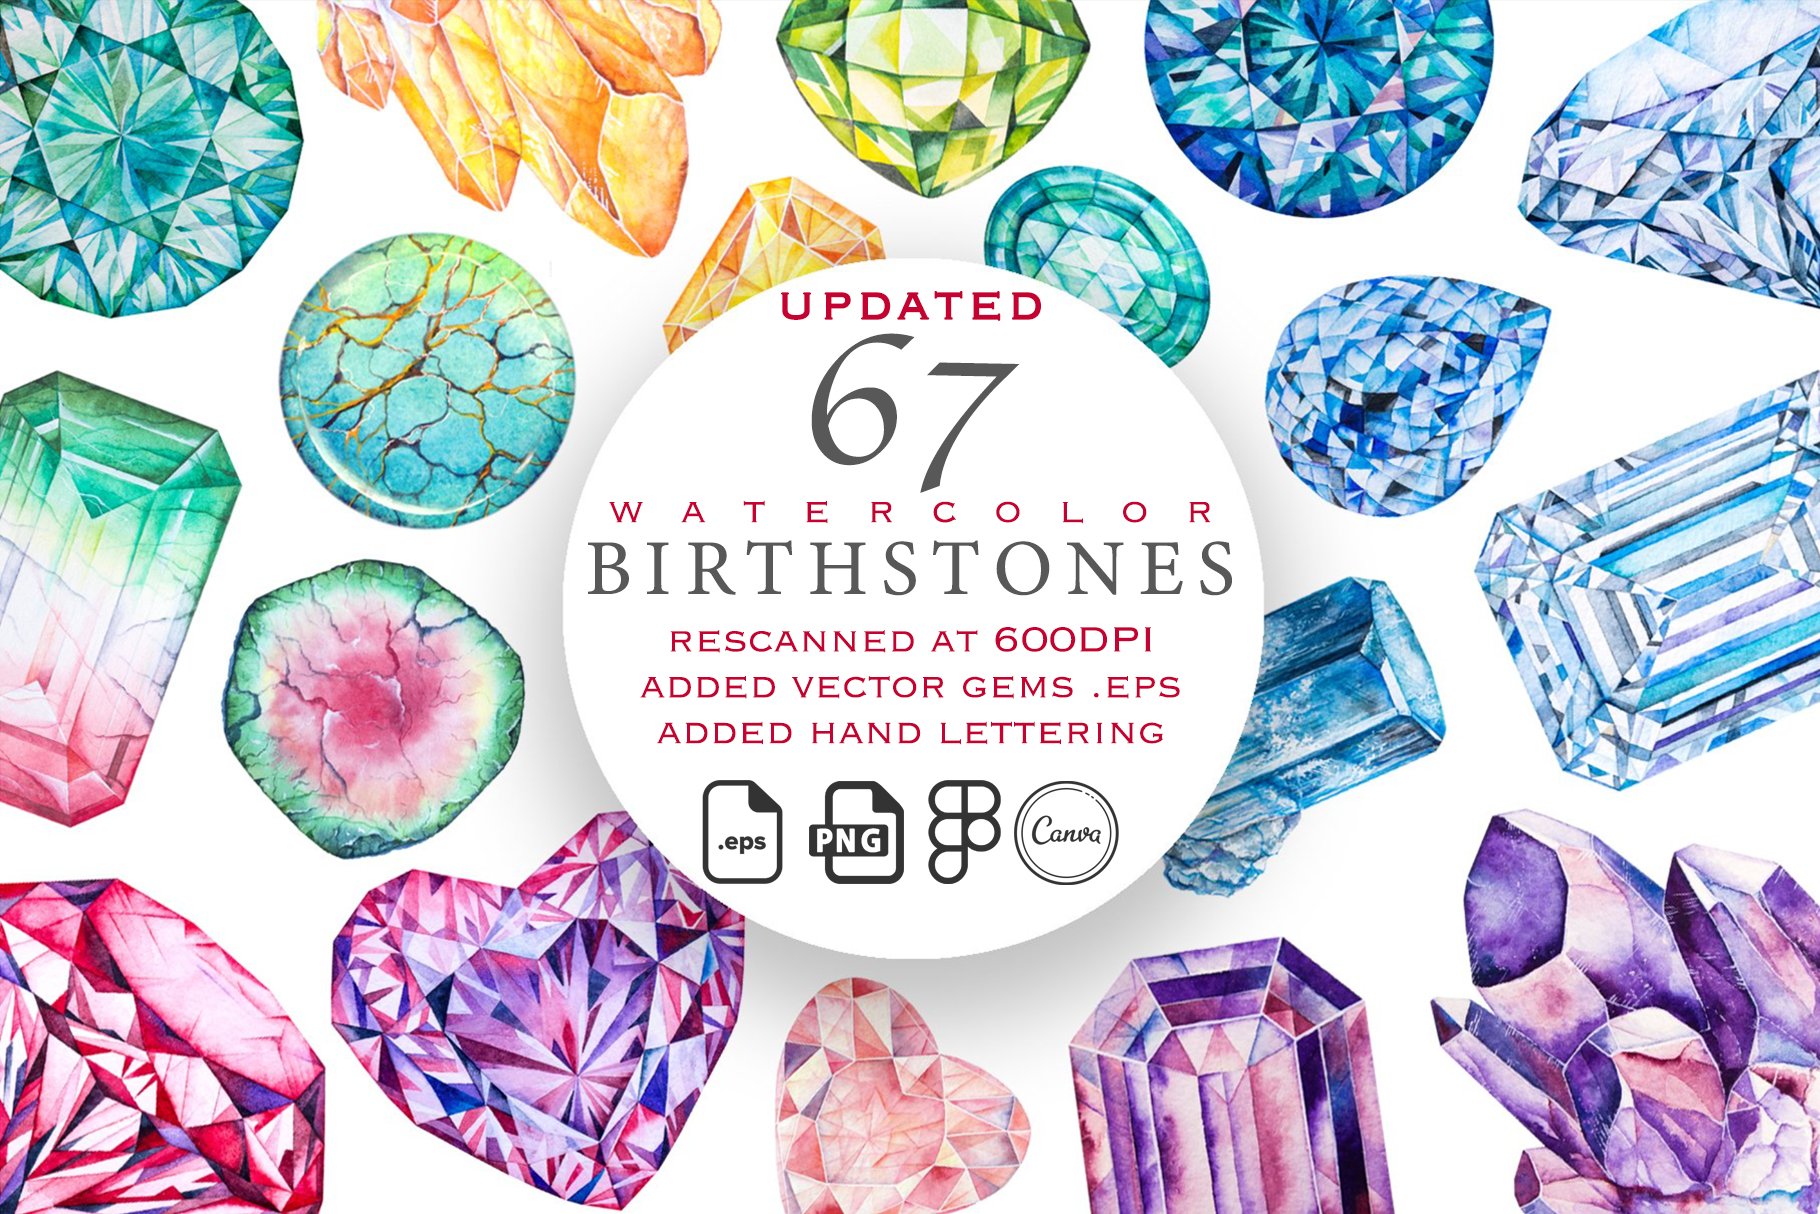 Watercolor Birthstones Crystal Set cover image.